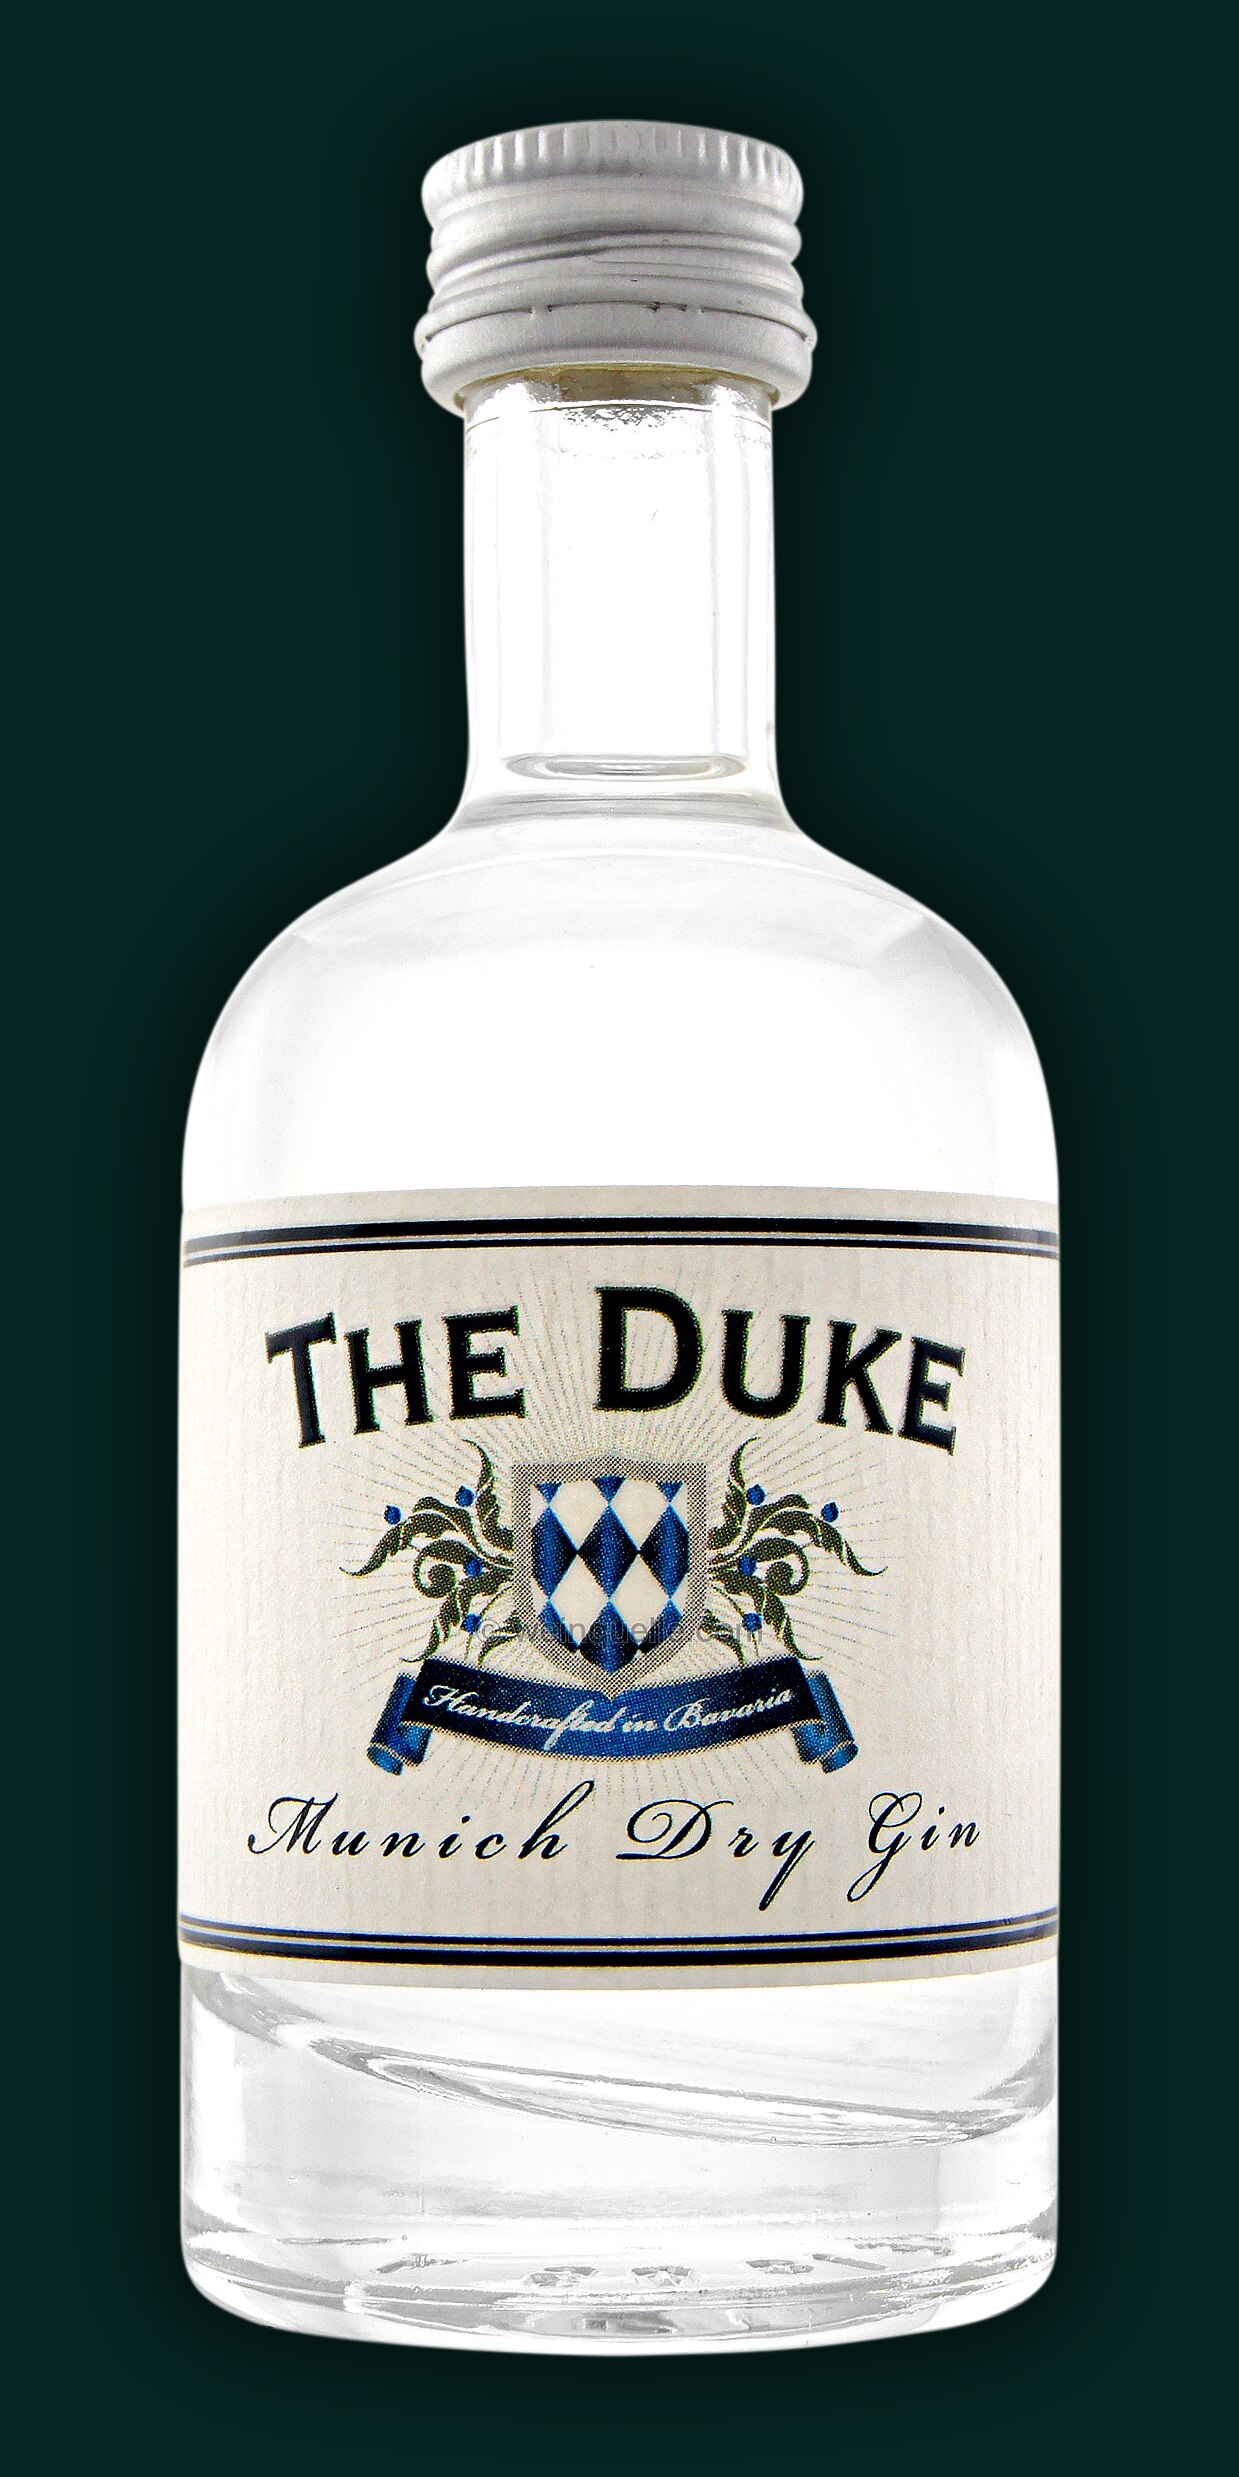 The Duke Munich Dry 0,05 4,75 Weinquelle Gin Liter, Lühmann - 45% €